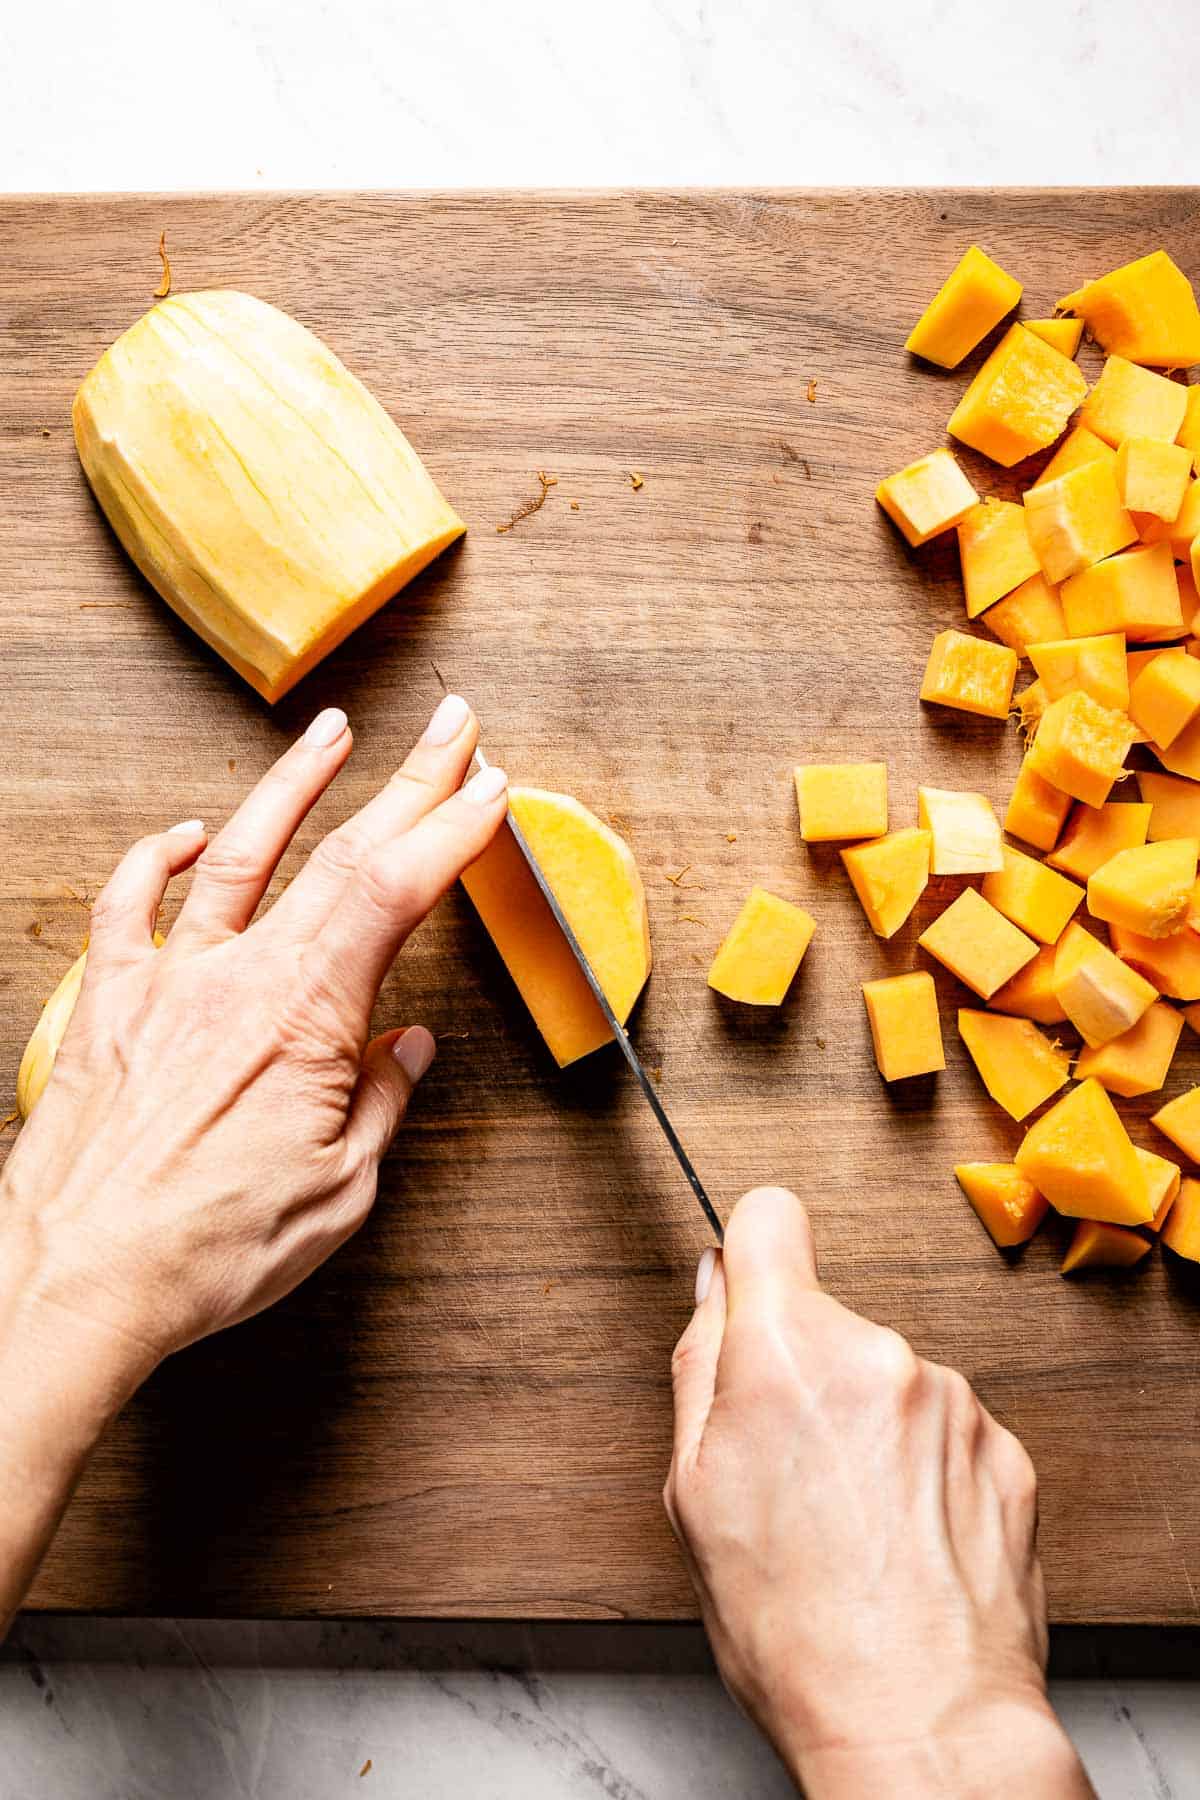 How To Cut Butternut Squash